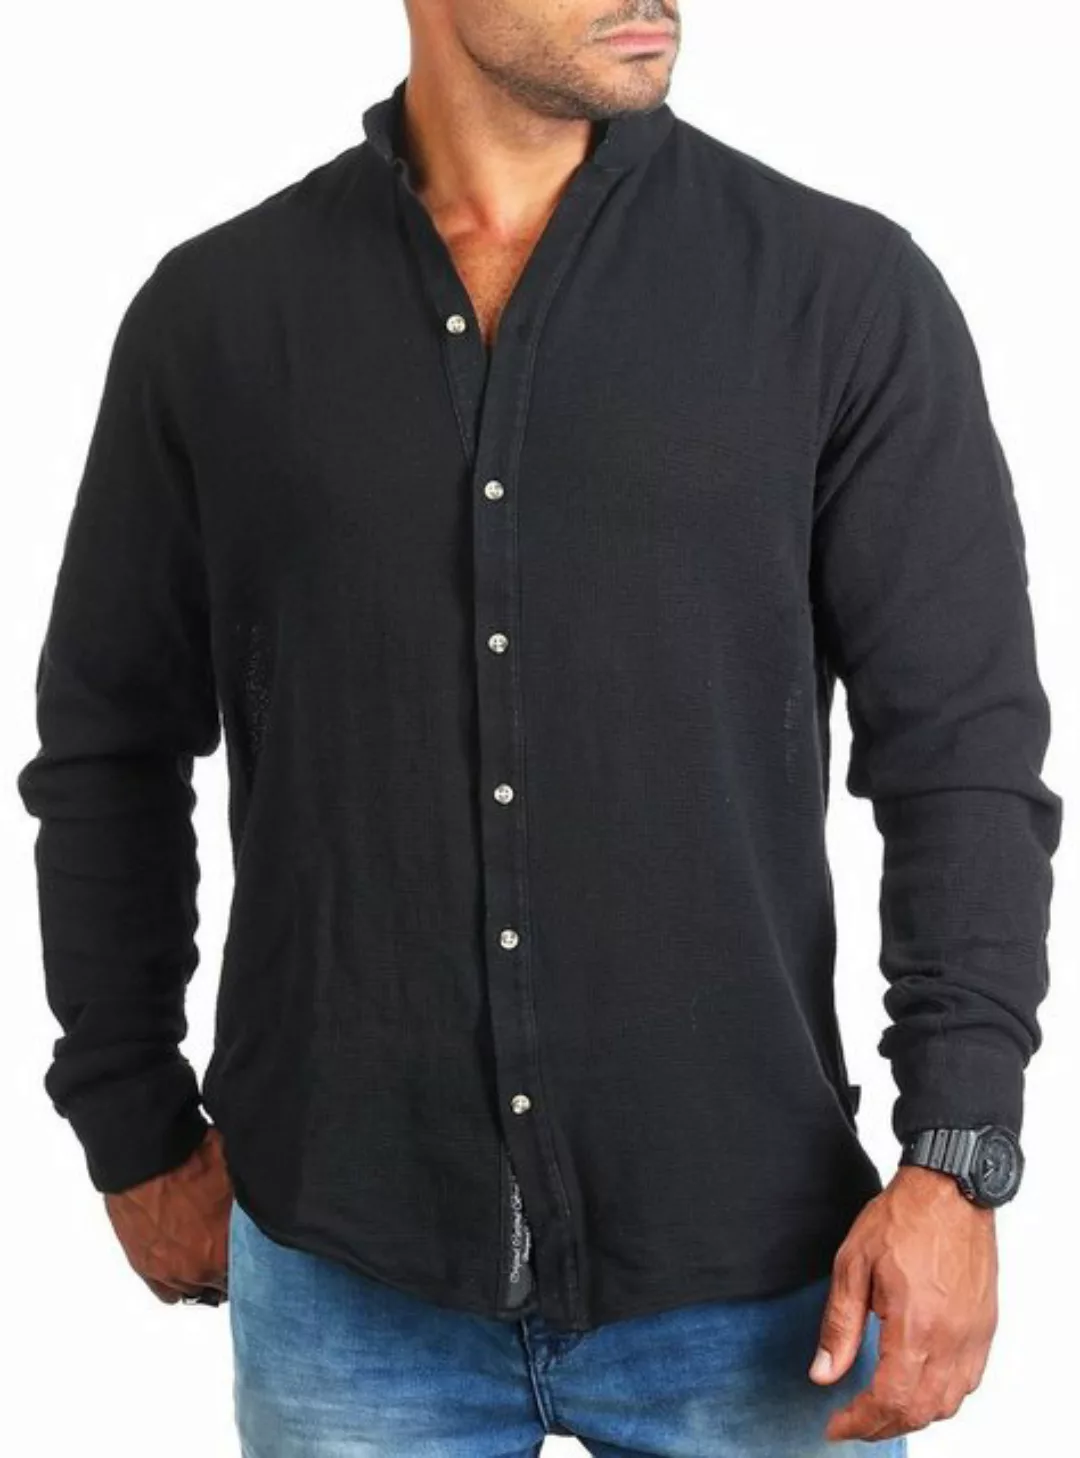 CARISMA Langarmhemd Herren Sommer Hemd trendig luftig grob gewebt retro Loo günstig online kaufen